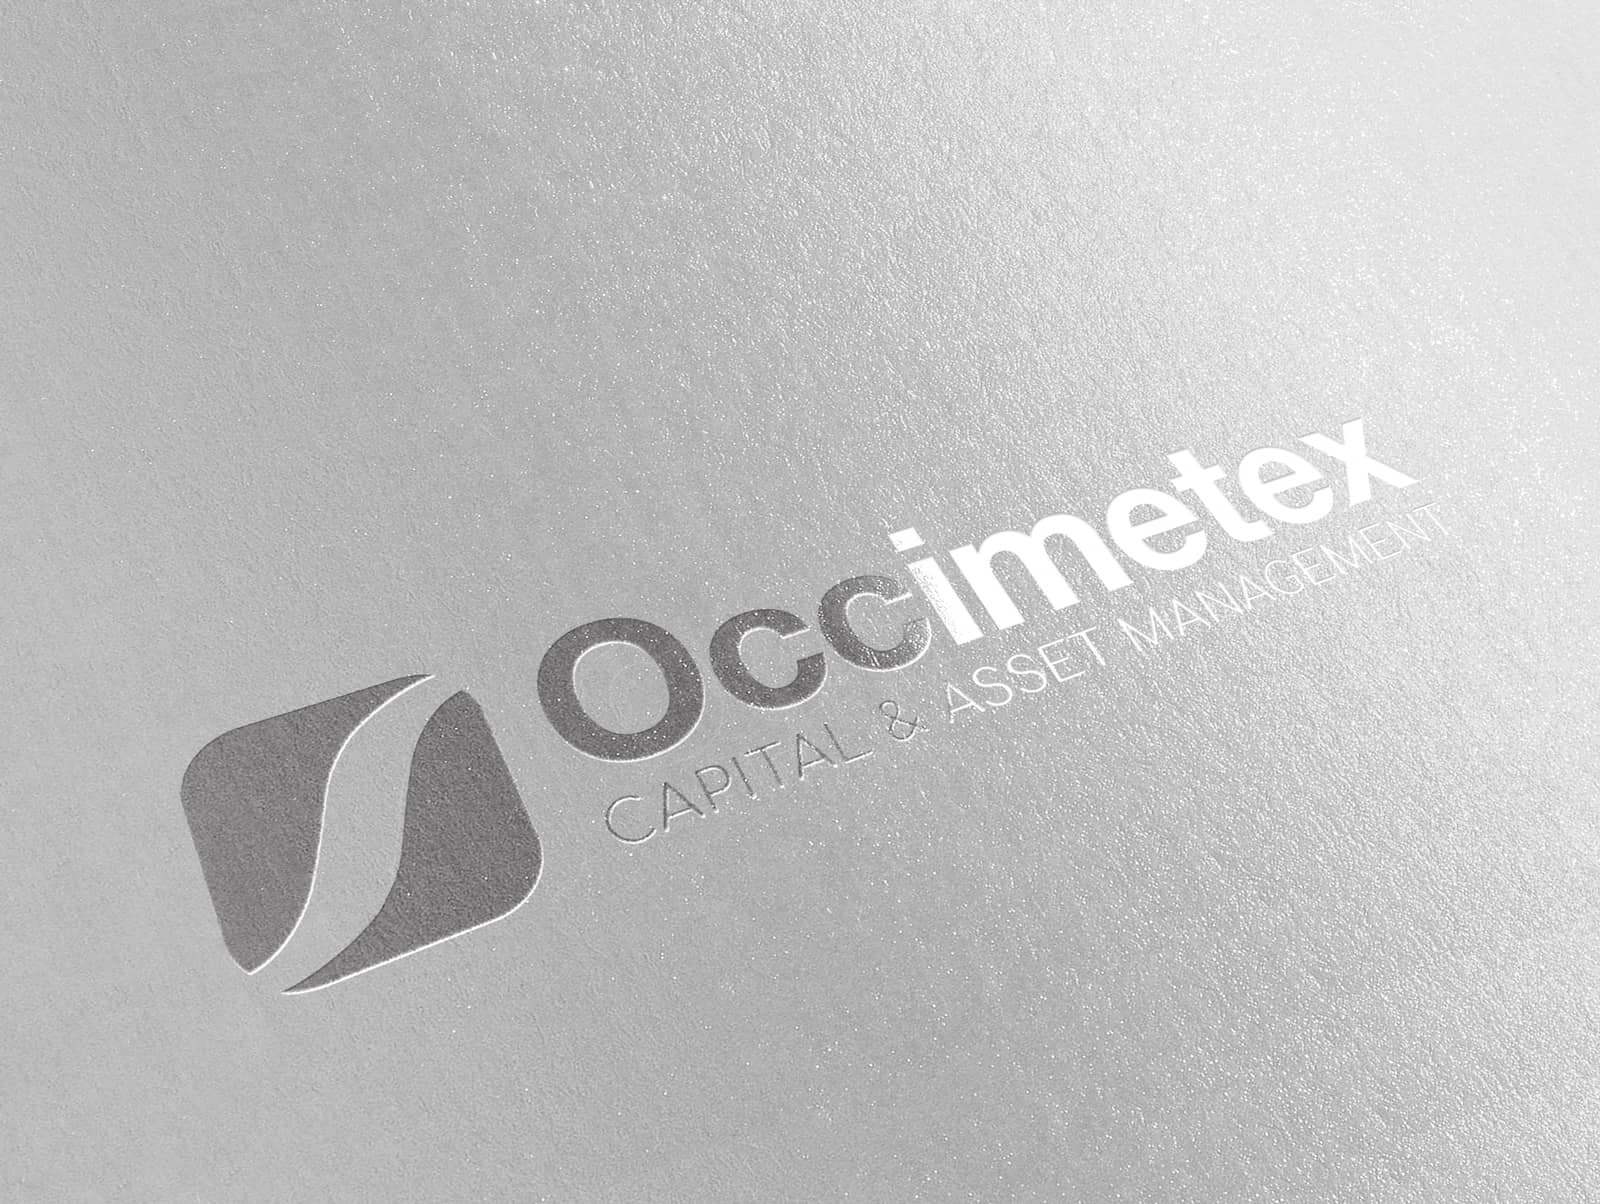 Logo plateado sobre papel blanco Occimetex branding por The Acctitude